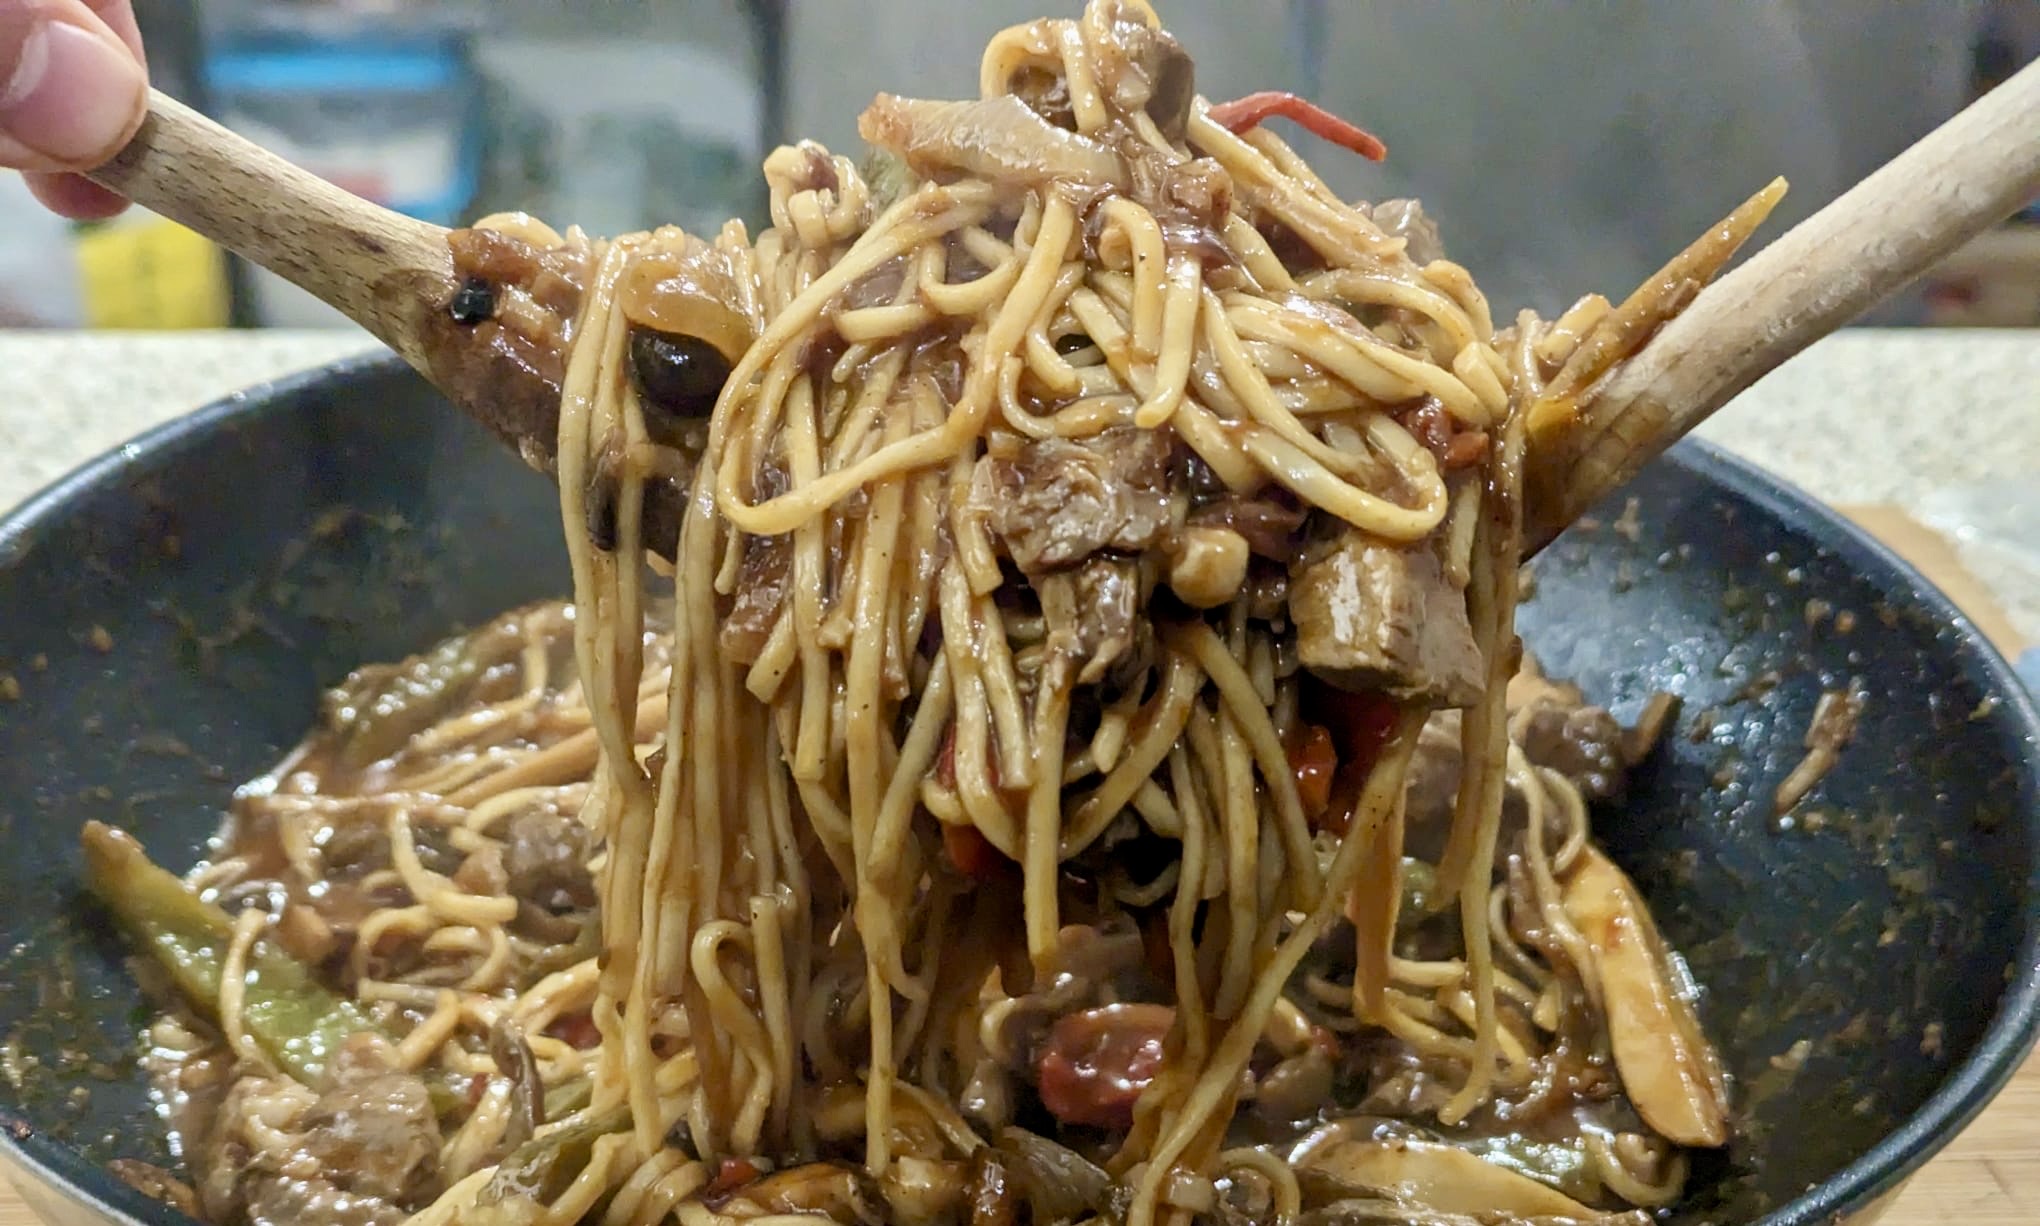 Lamb noodles with vegetable stir fry